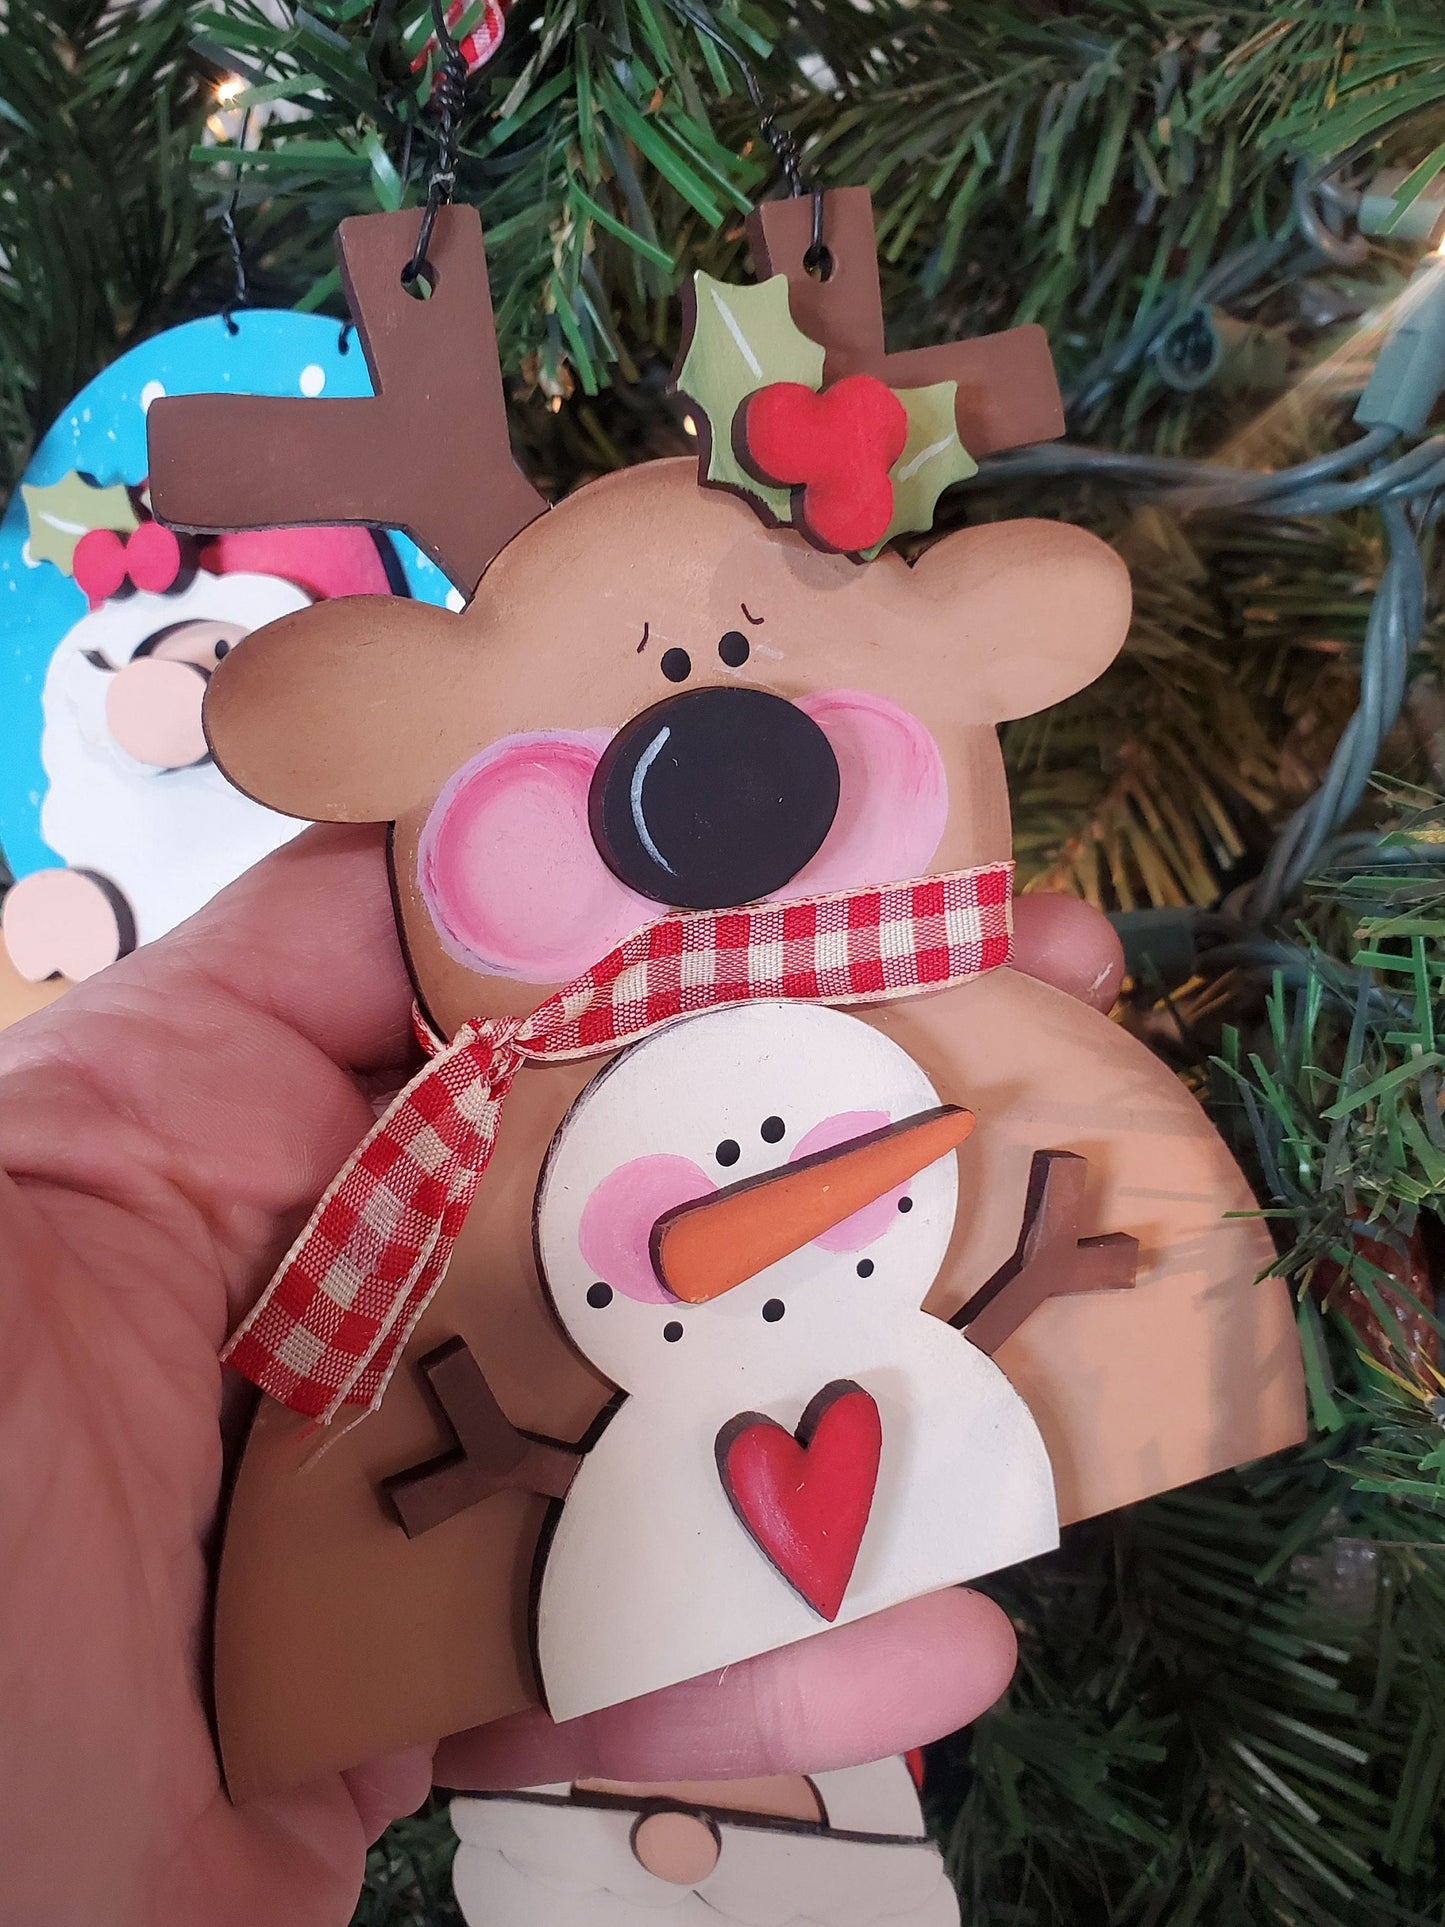 Reindeer Buddy SVG| Laser Cut Snowman Ornament| Glowforge| Ornament SVG